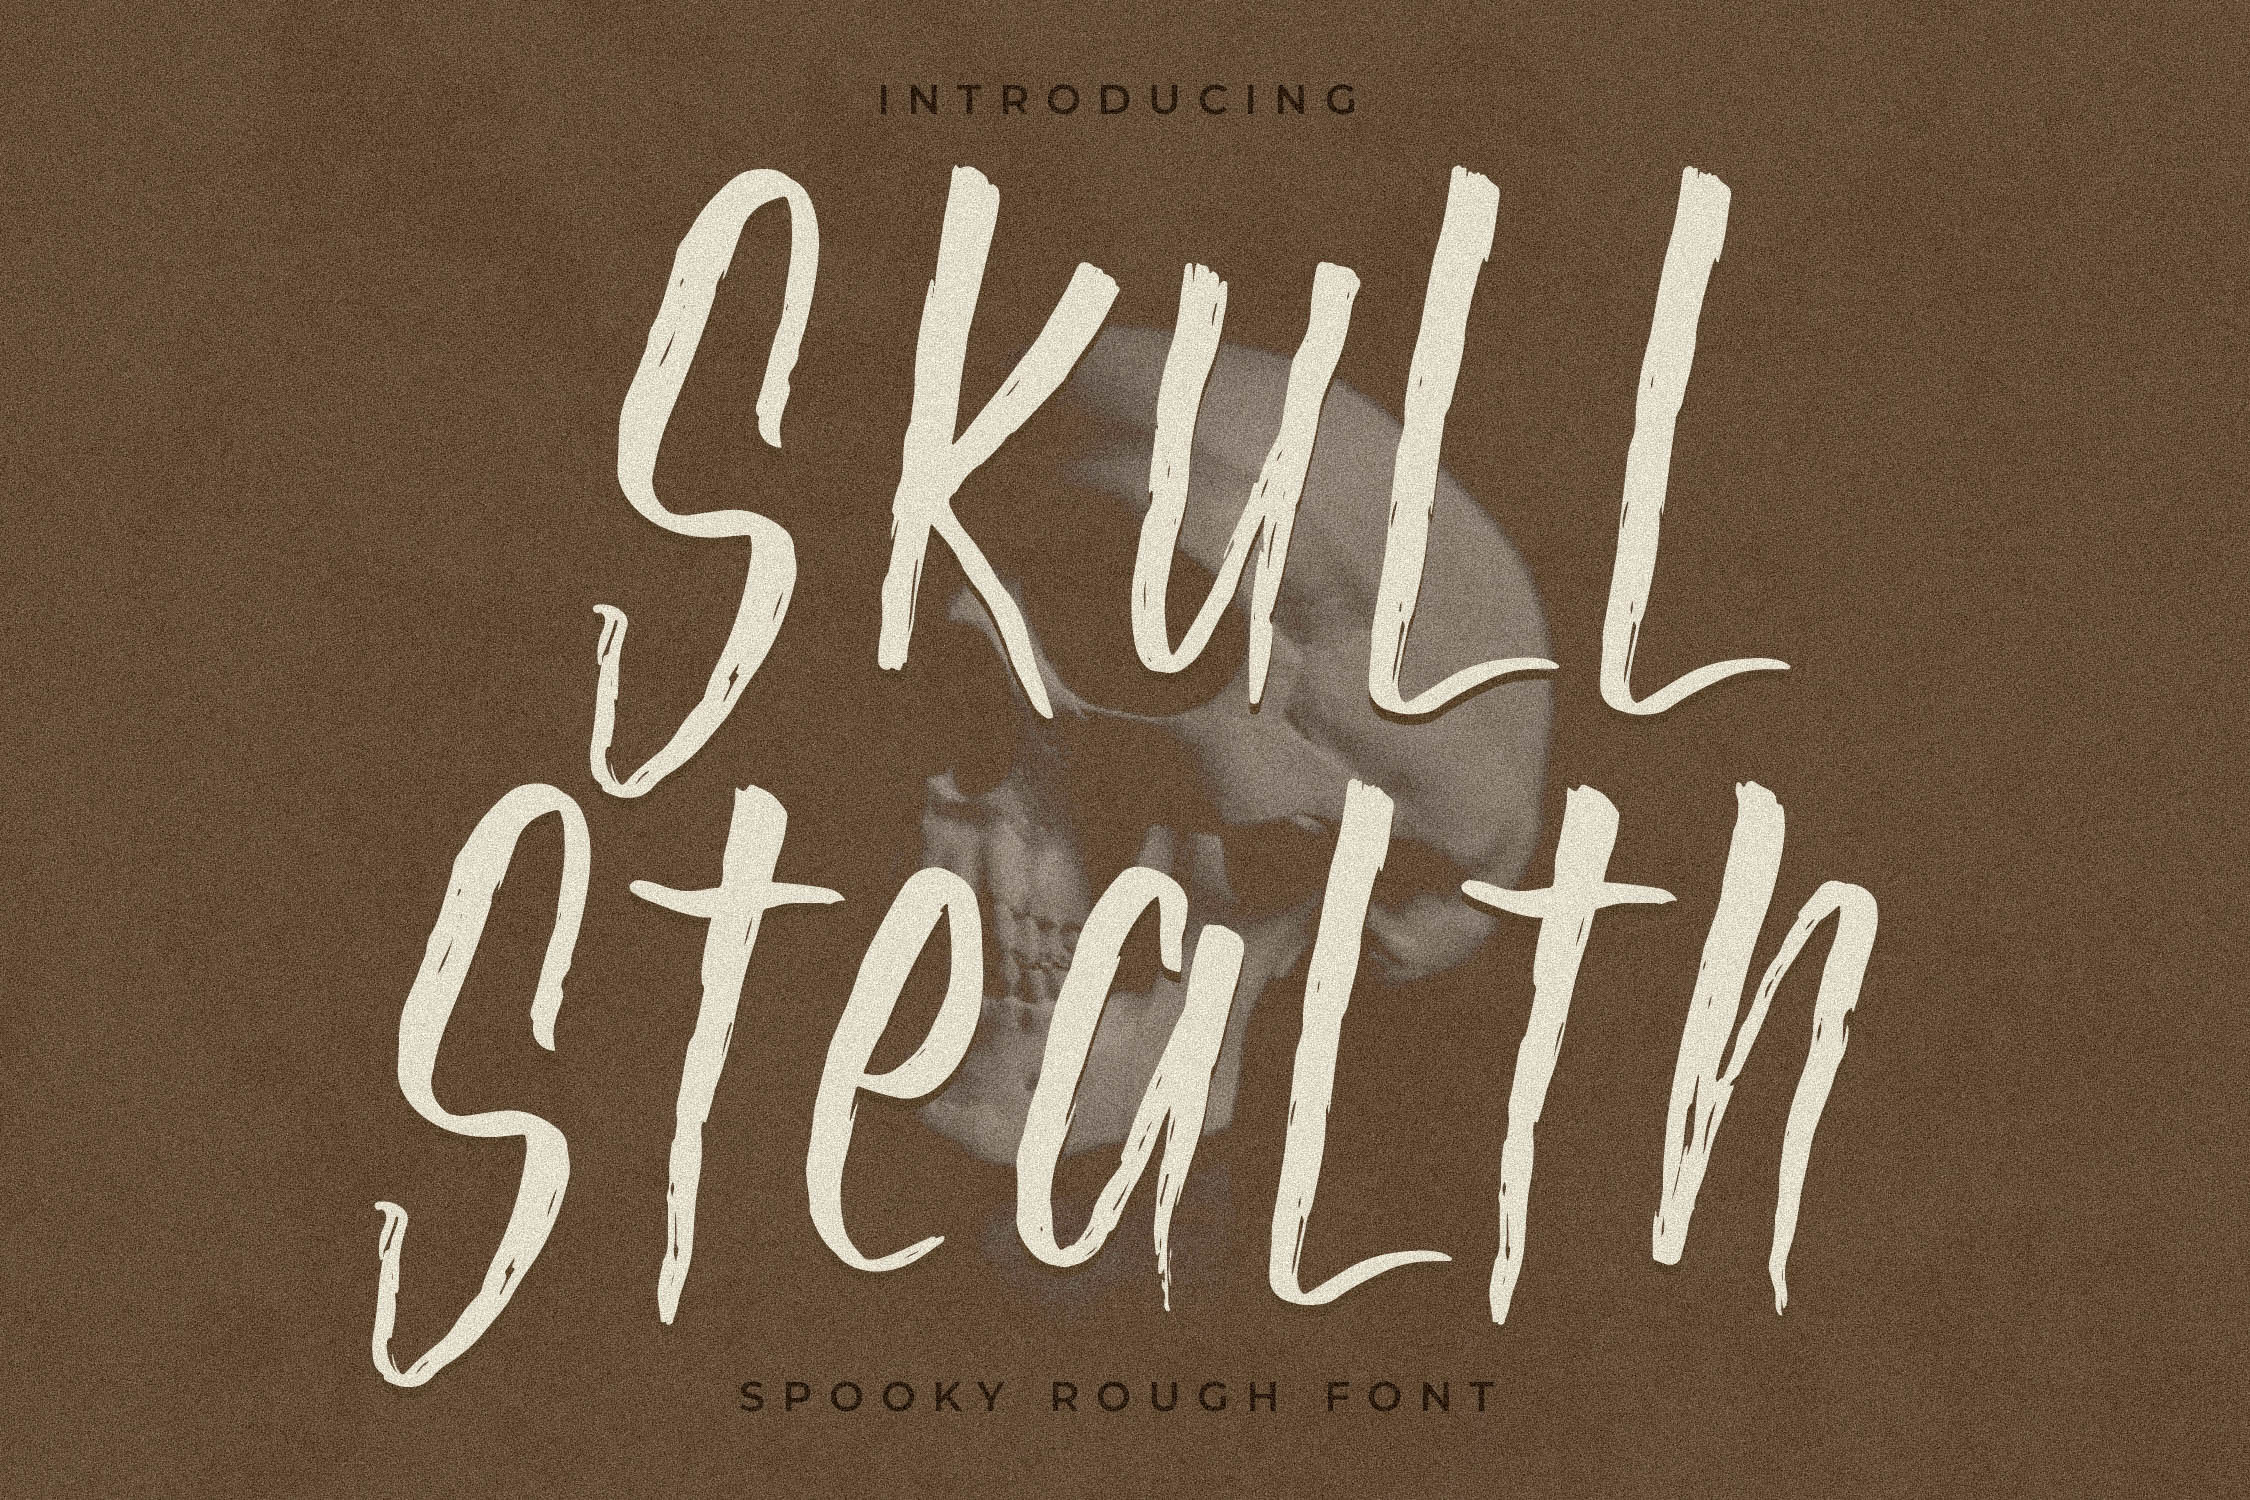 Skull Stealth Display Font